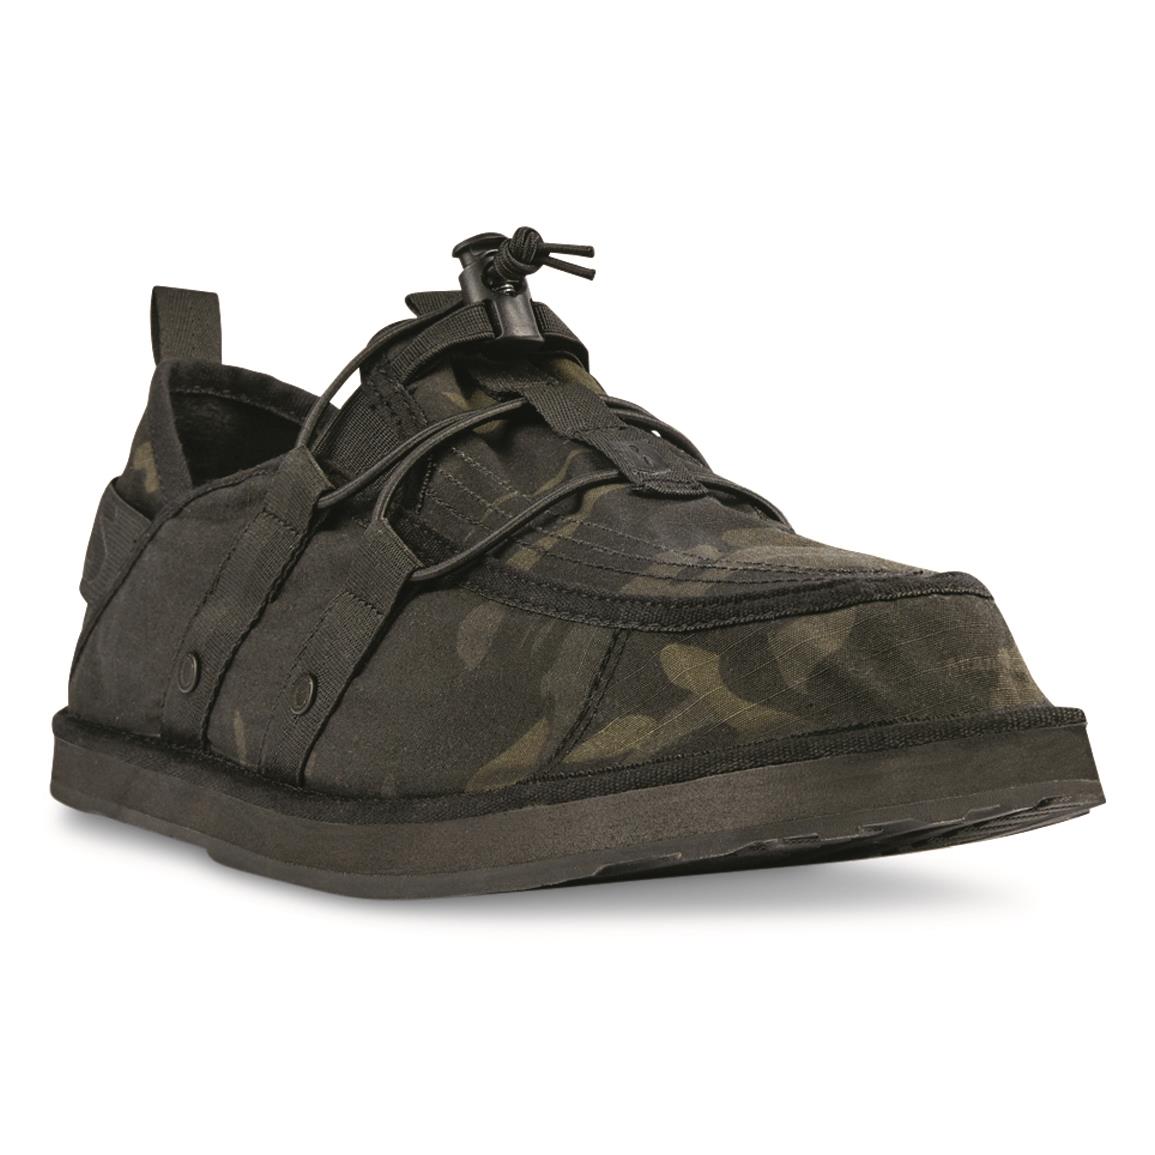 Viktos Men's Trenchfoot Tactical Leisure Shoes, Multicam Black